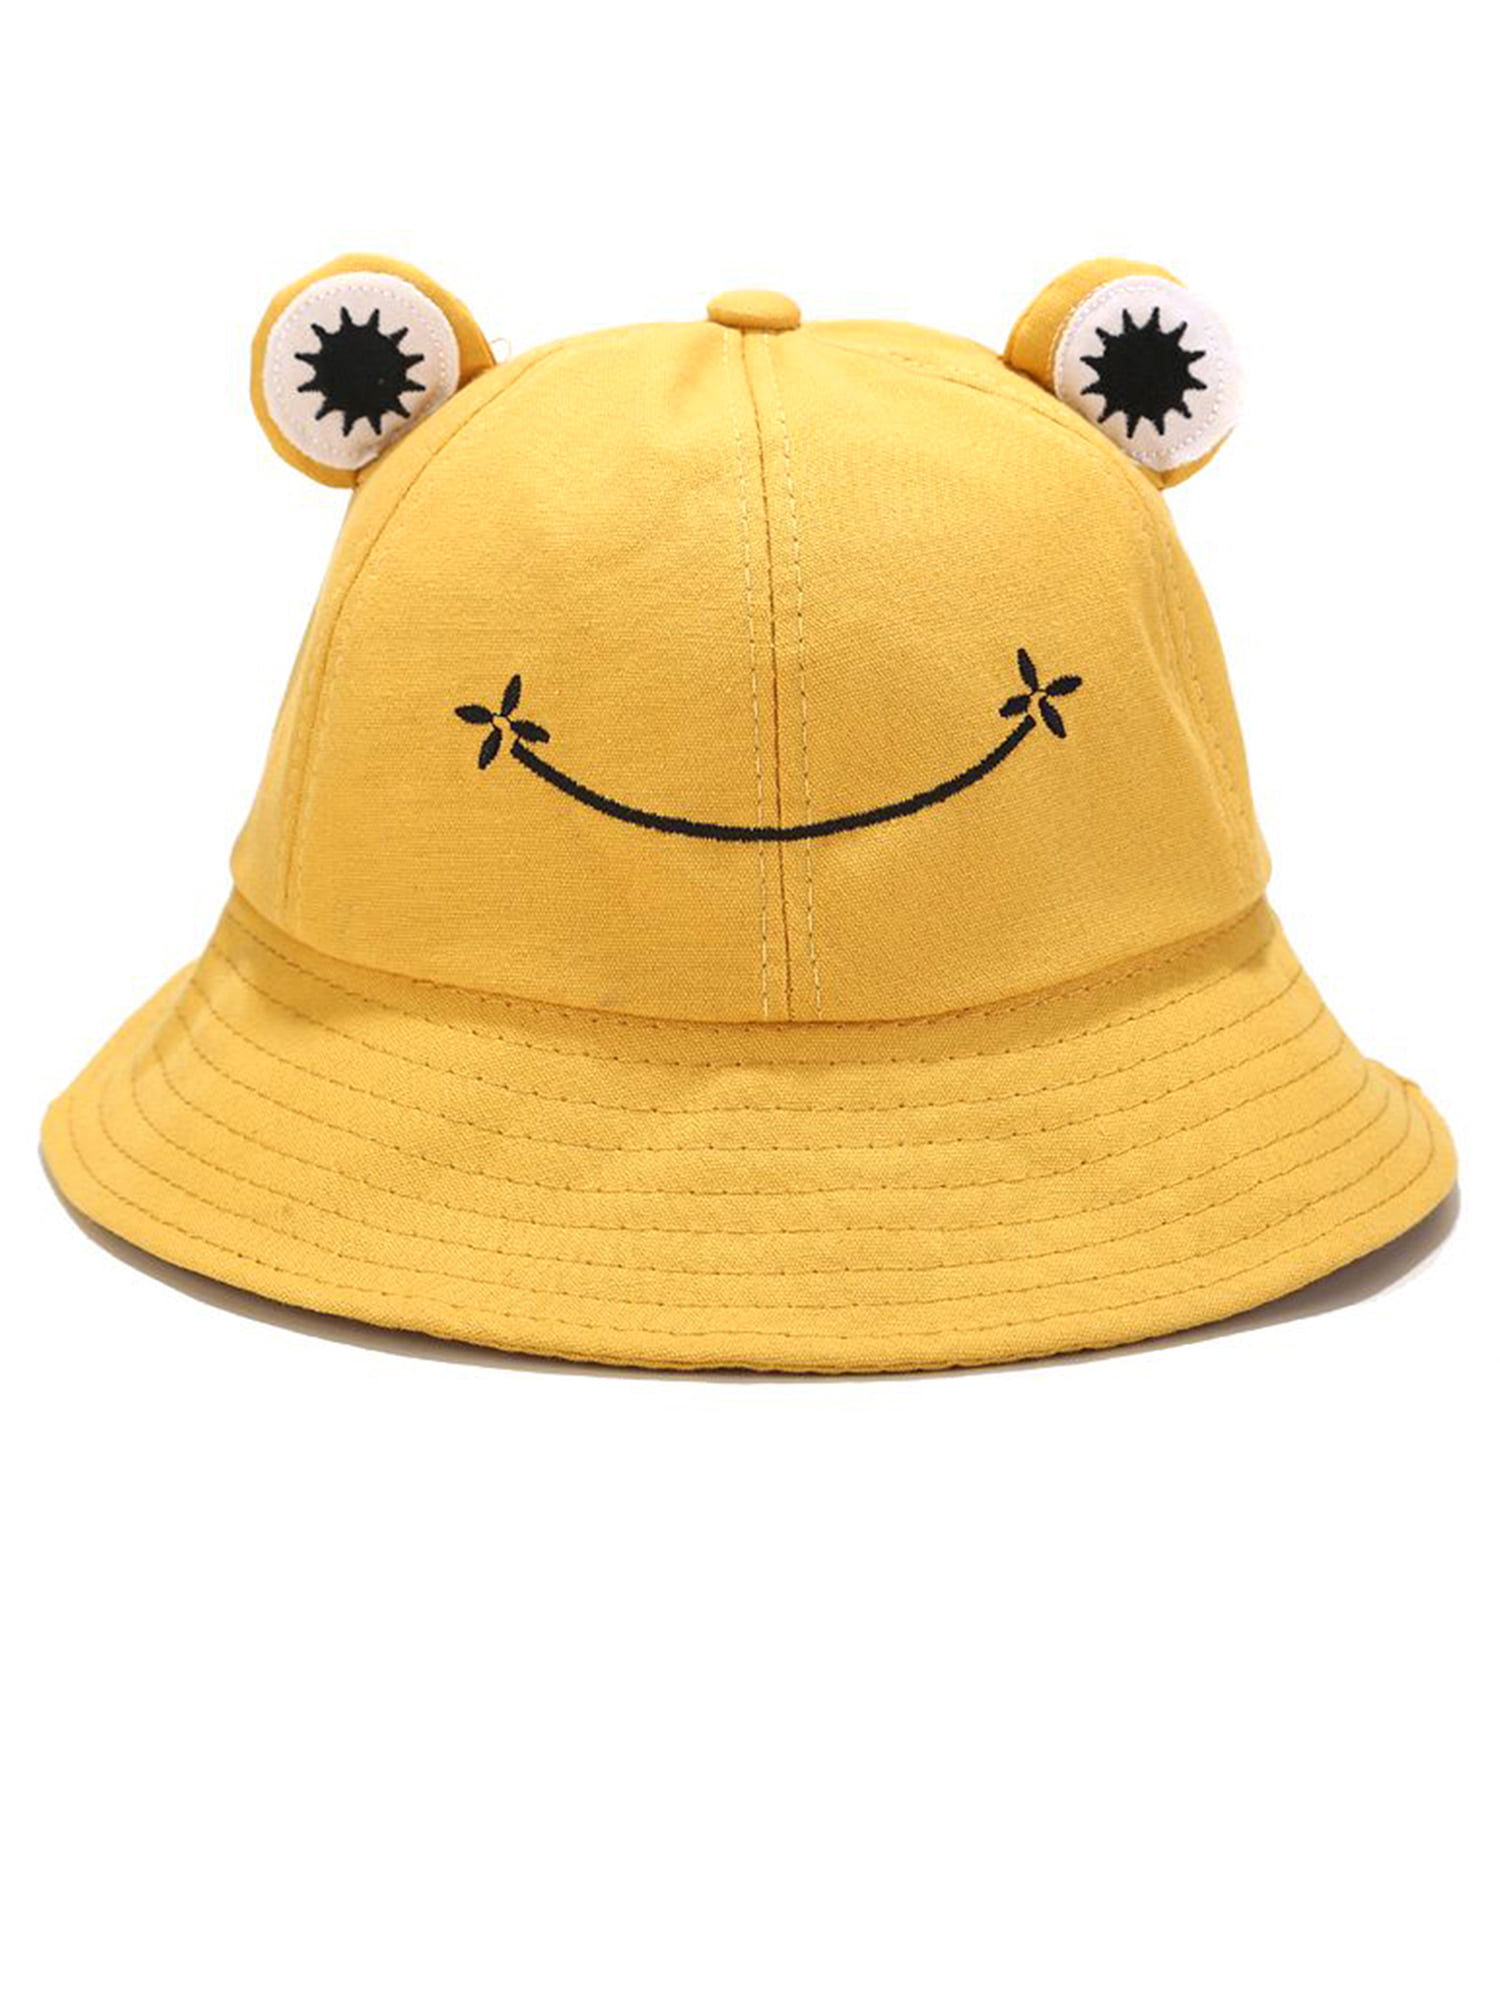 Kids Cotton Bucket Hat Reversible Sun Hat Foldable Beach Cap With Adjustable Ch 